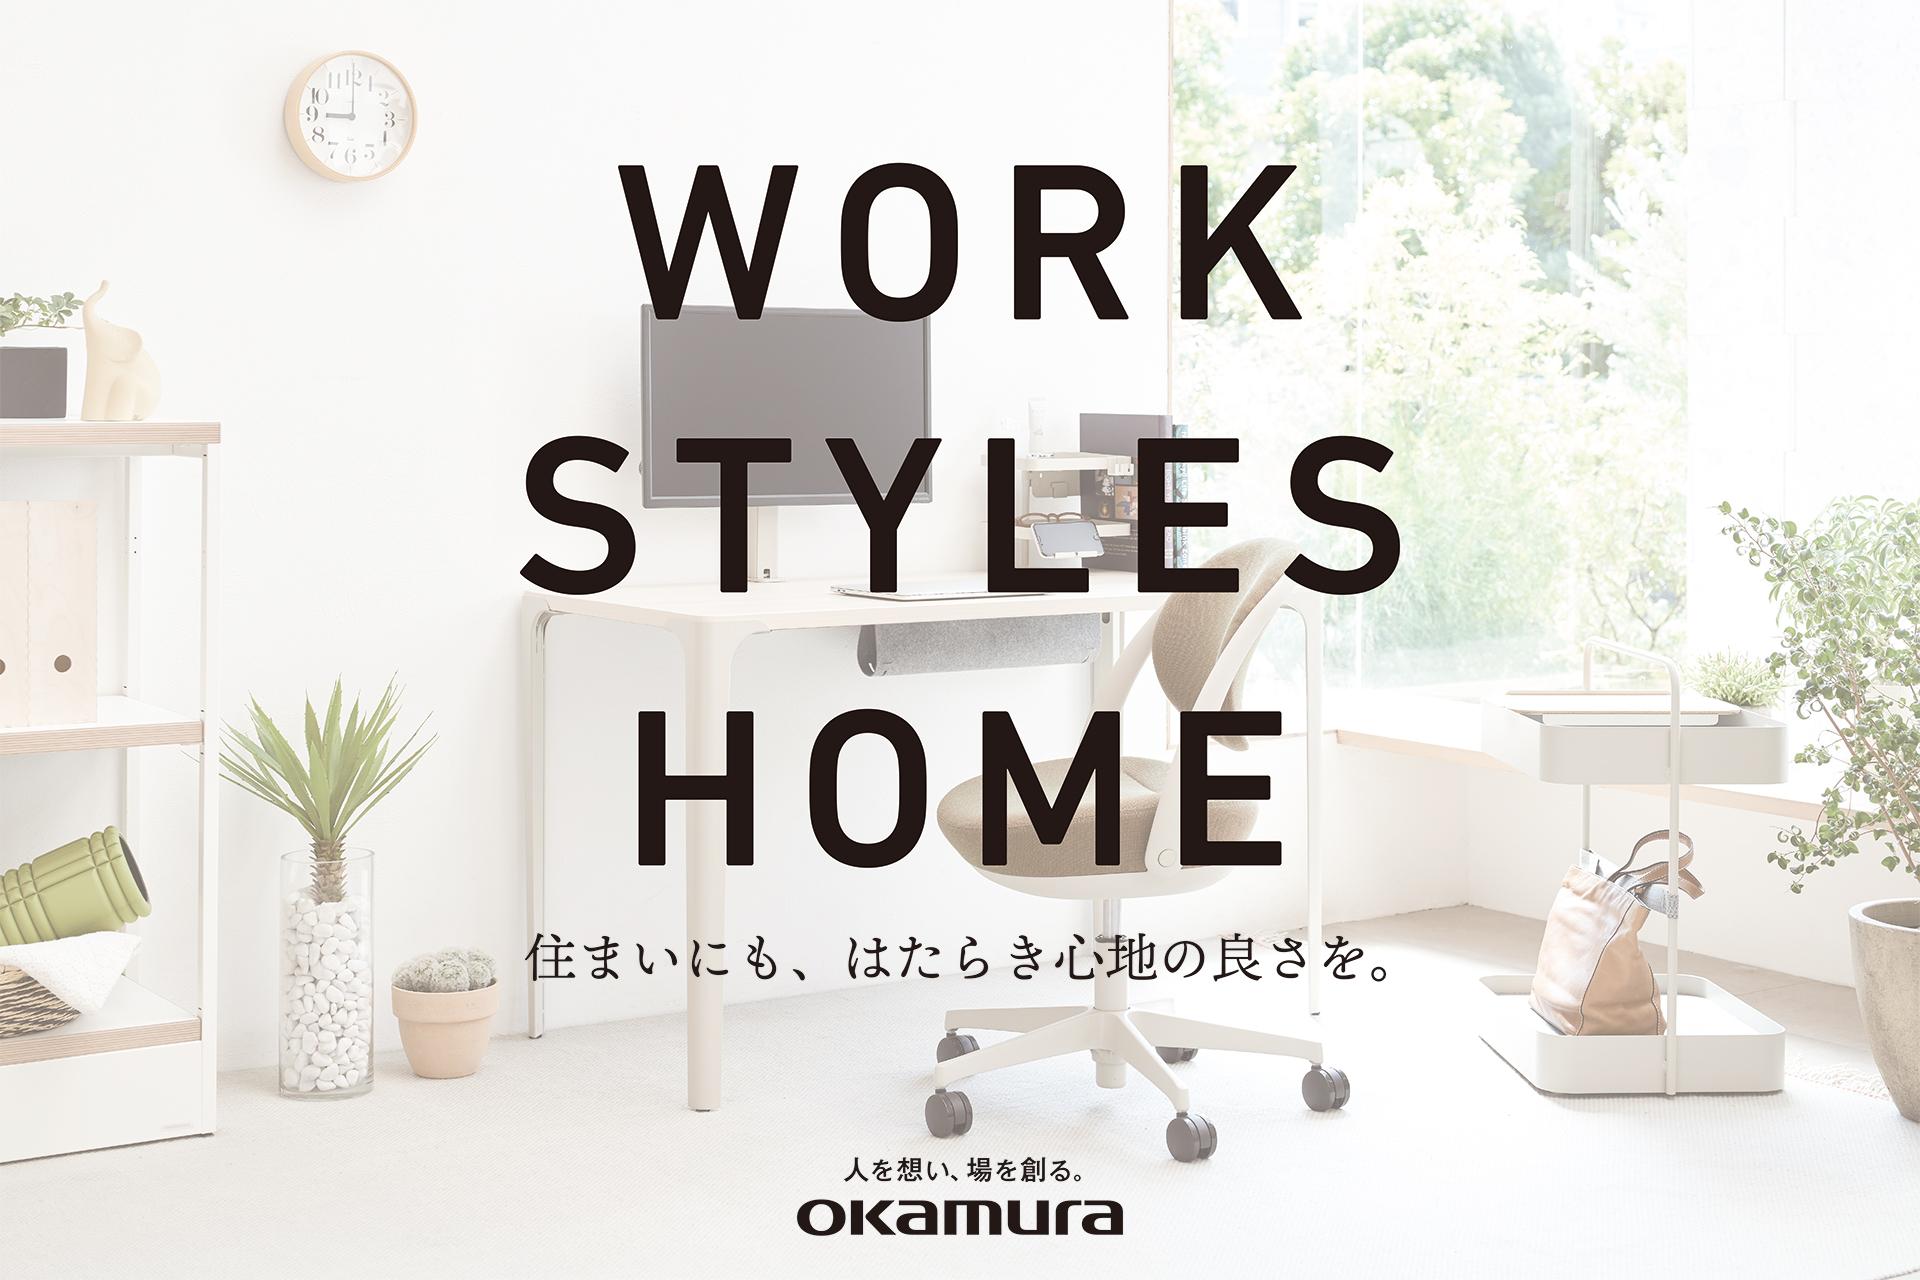 WORK STYLES HOME by okamura